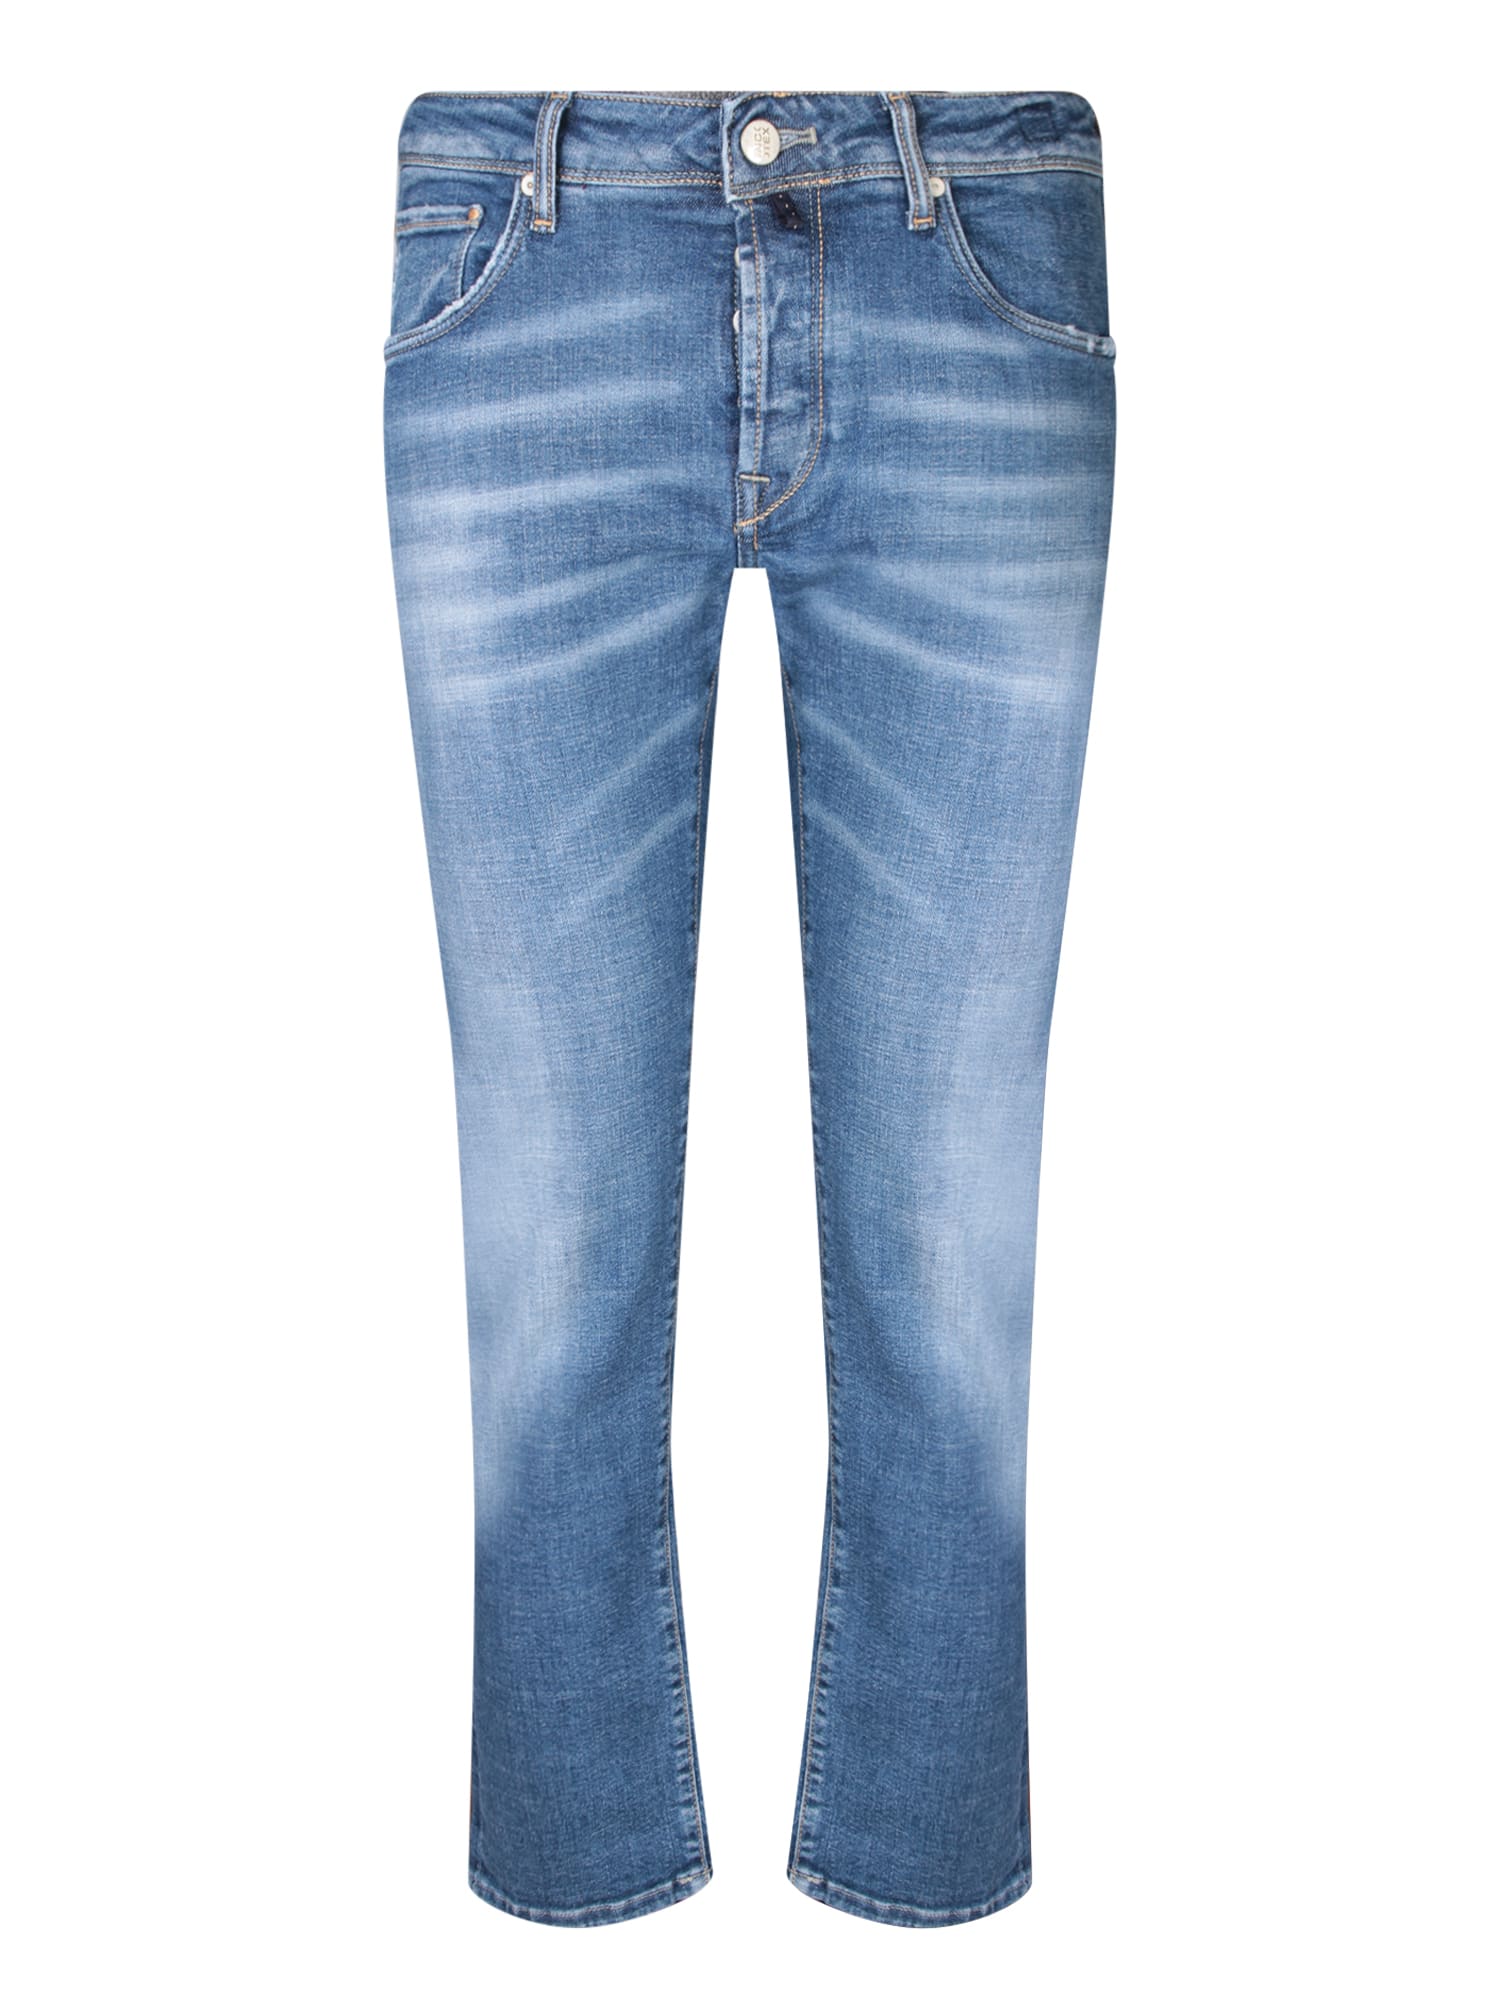 Shop Incotex 5t Distressed Blue Jeans